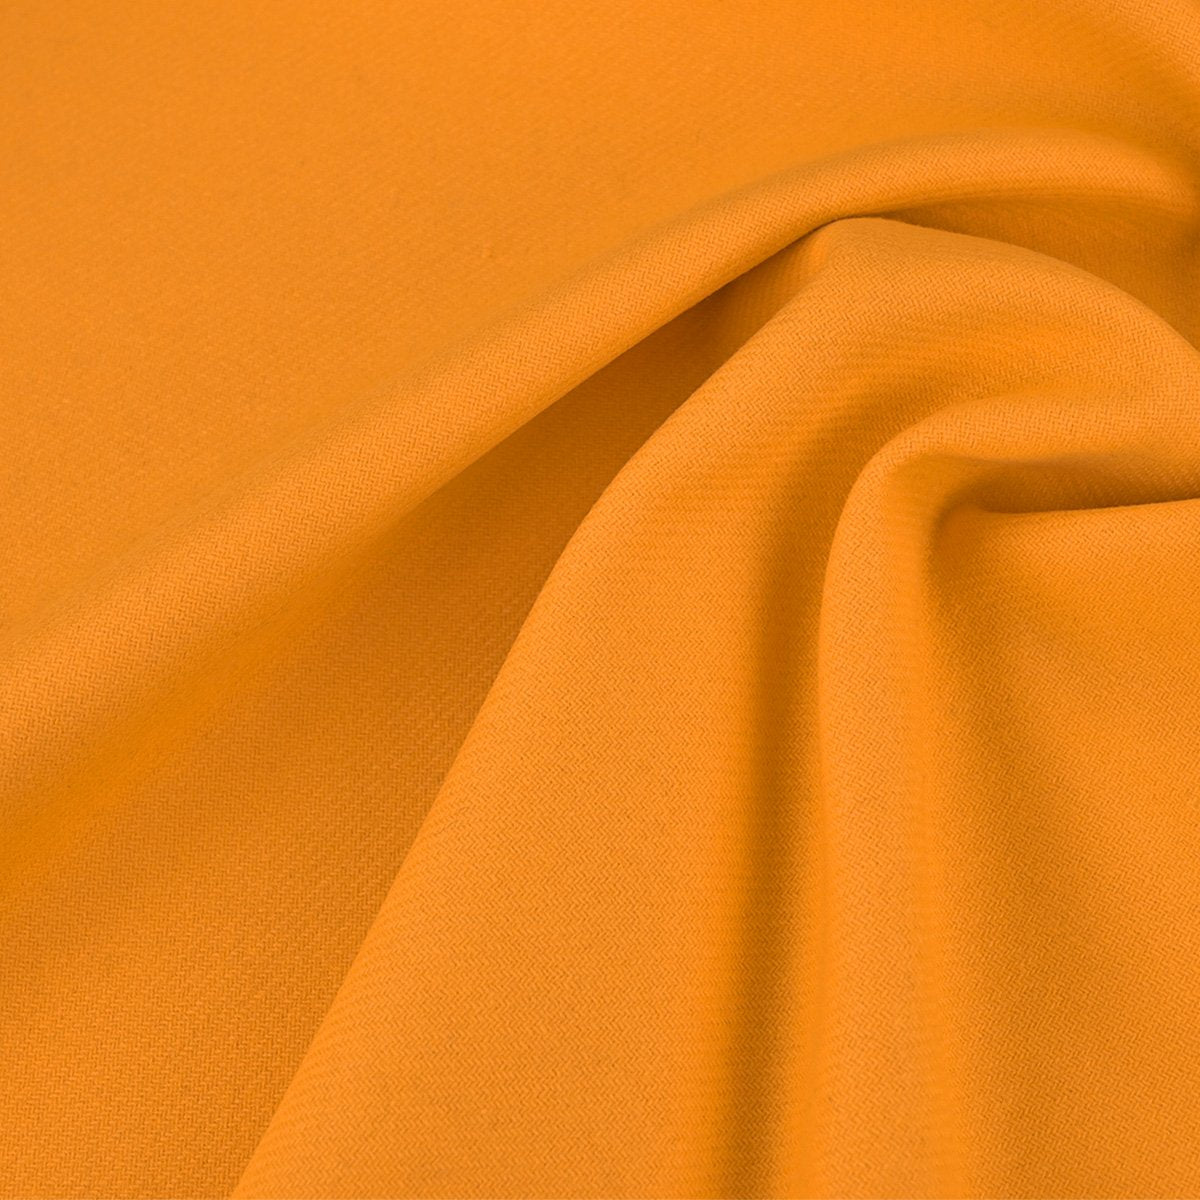 Orange Doubleweave Coating Fabric 4205